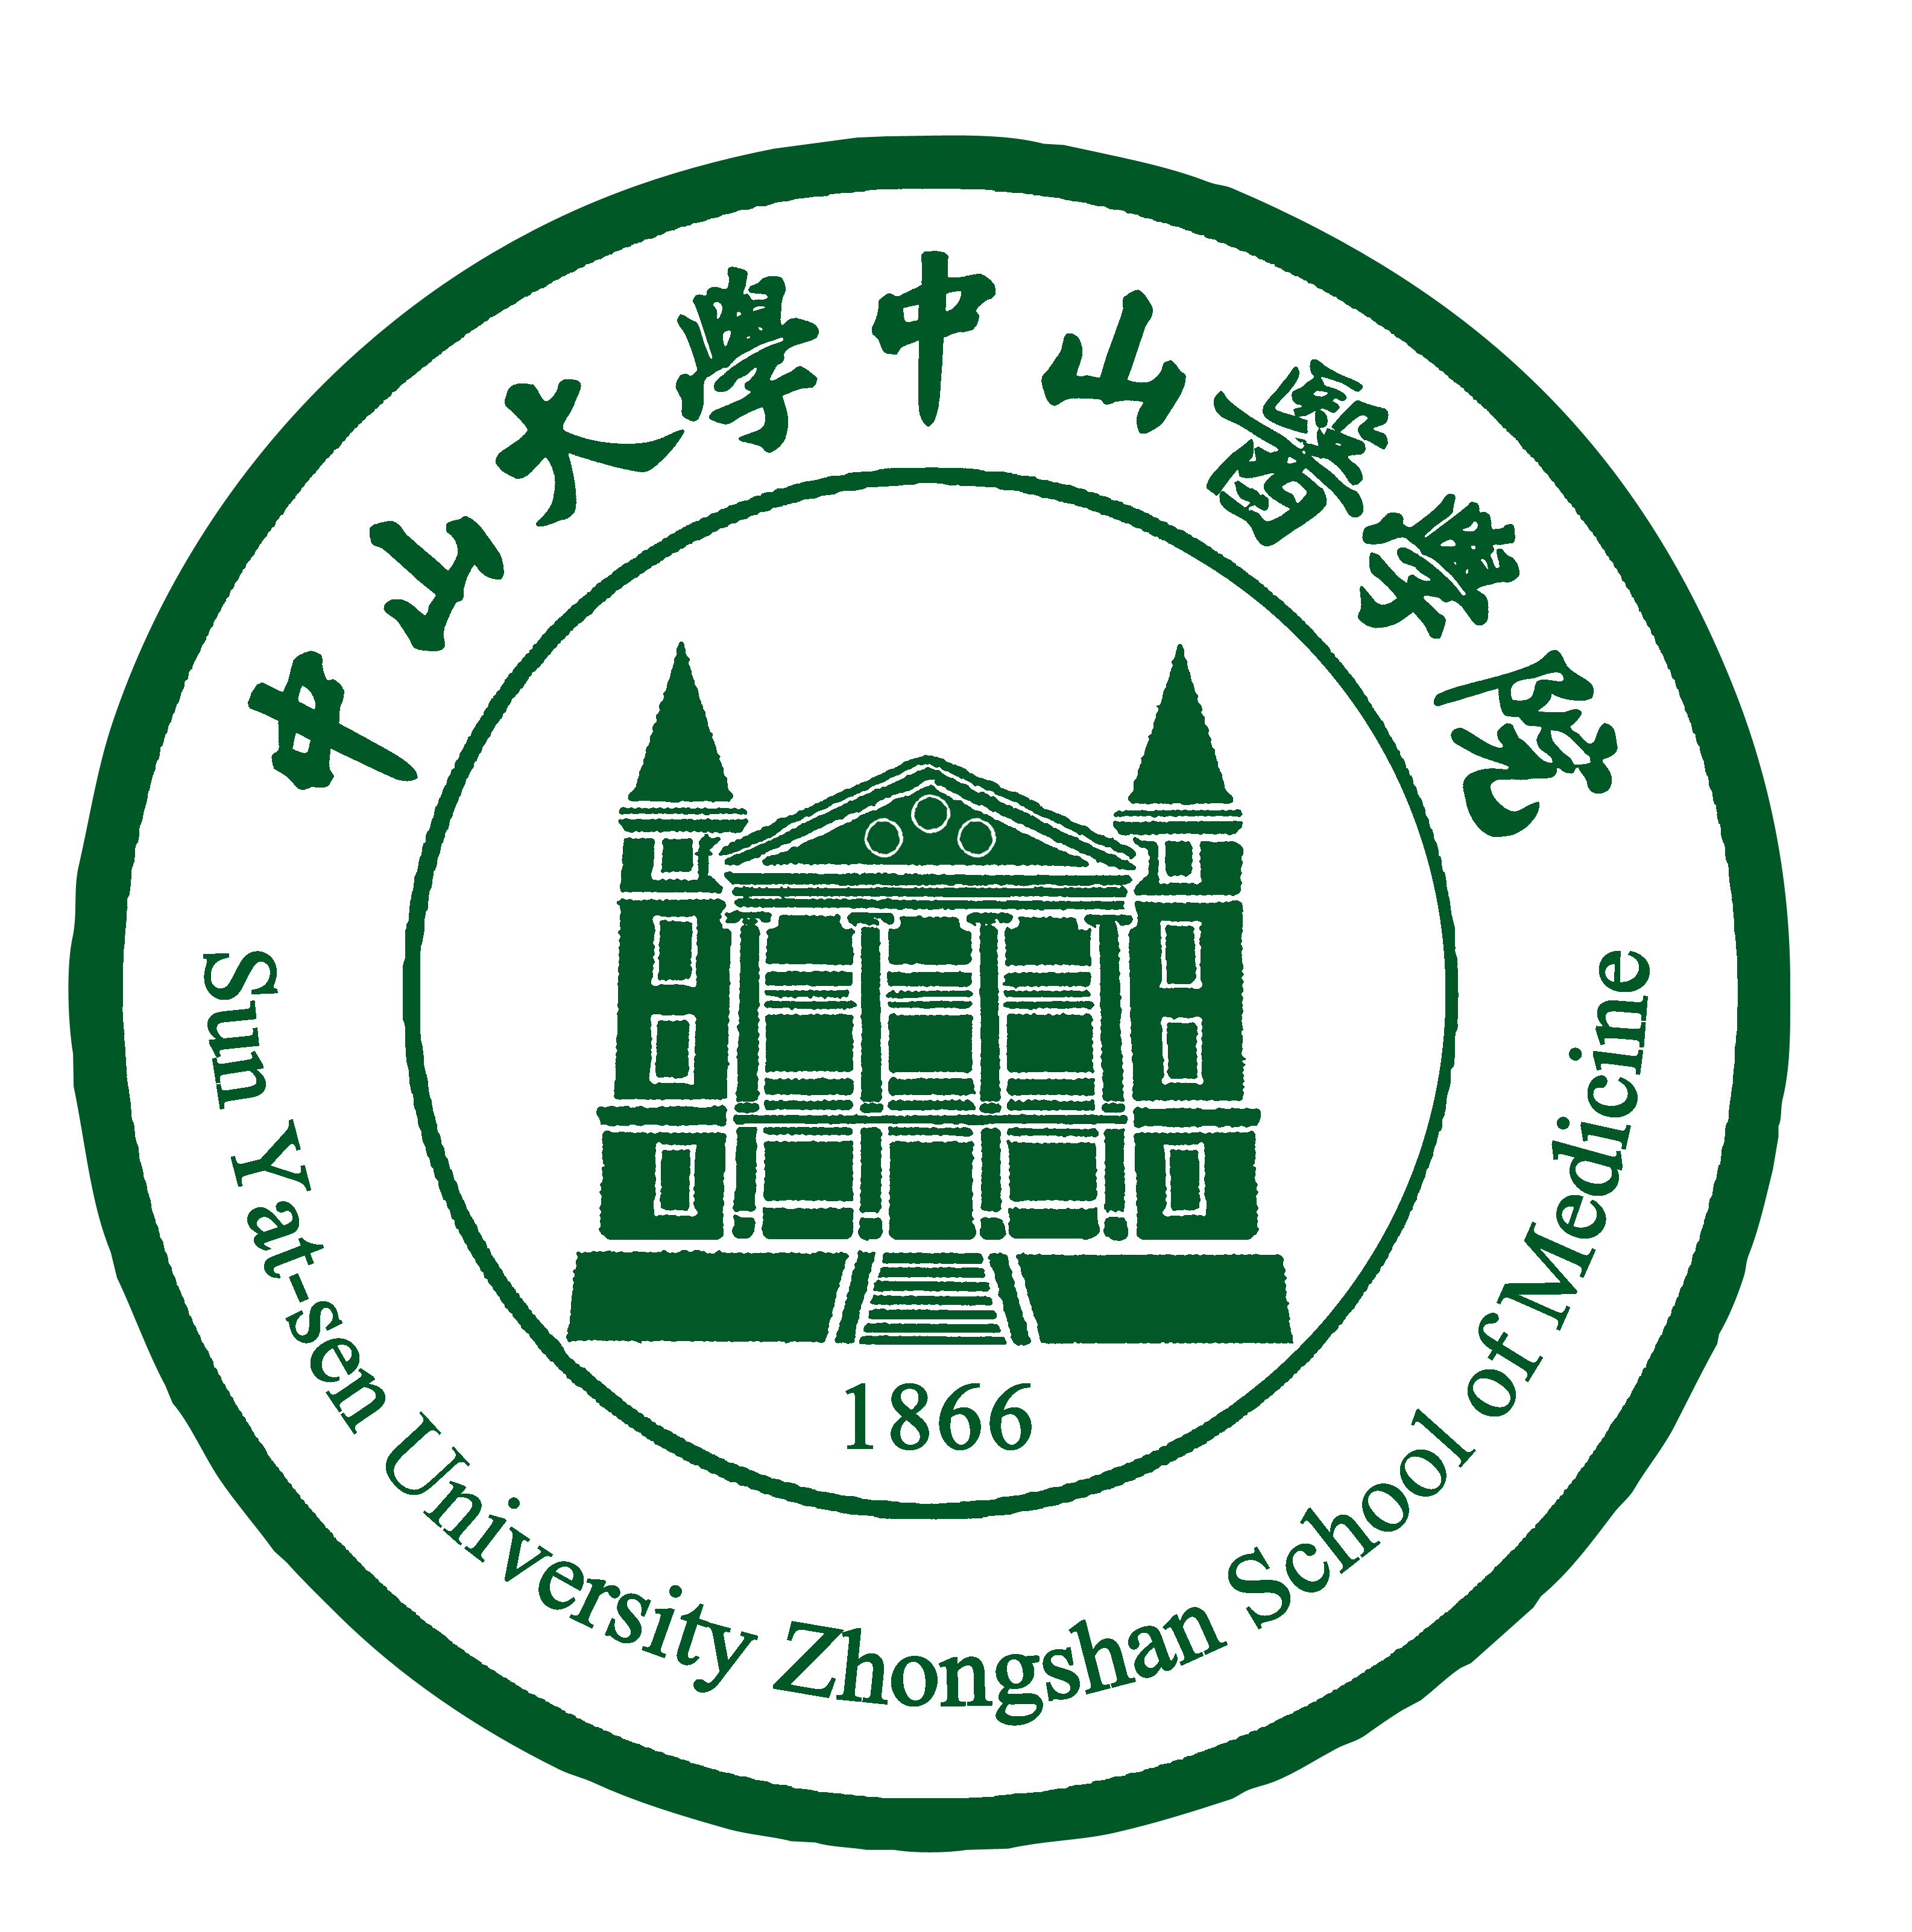 schoolofmedicine)位于广东广州,是隶属于中山大学的二级学院,是教育